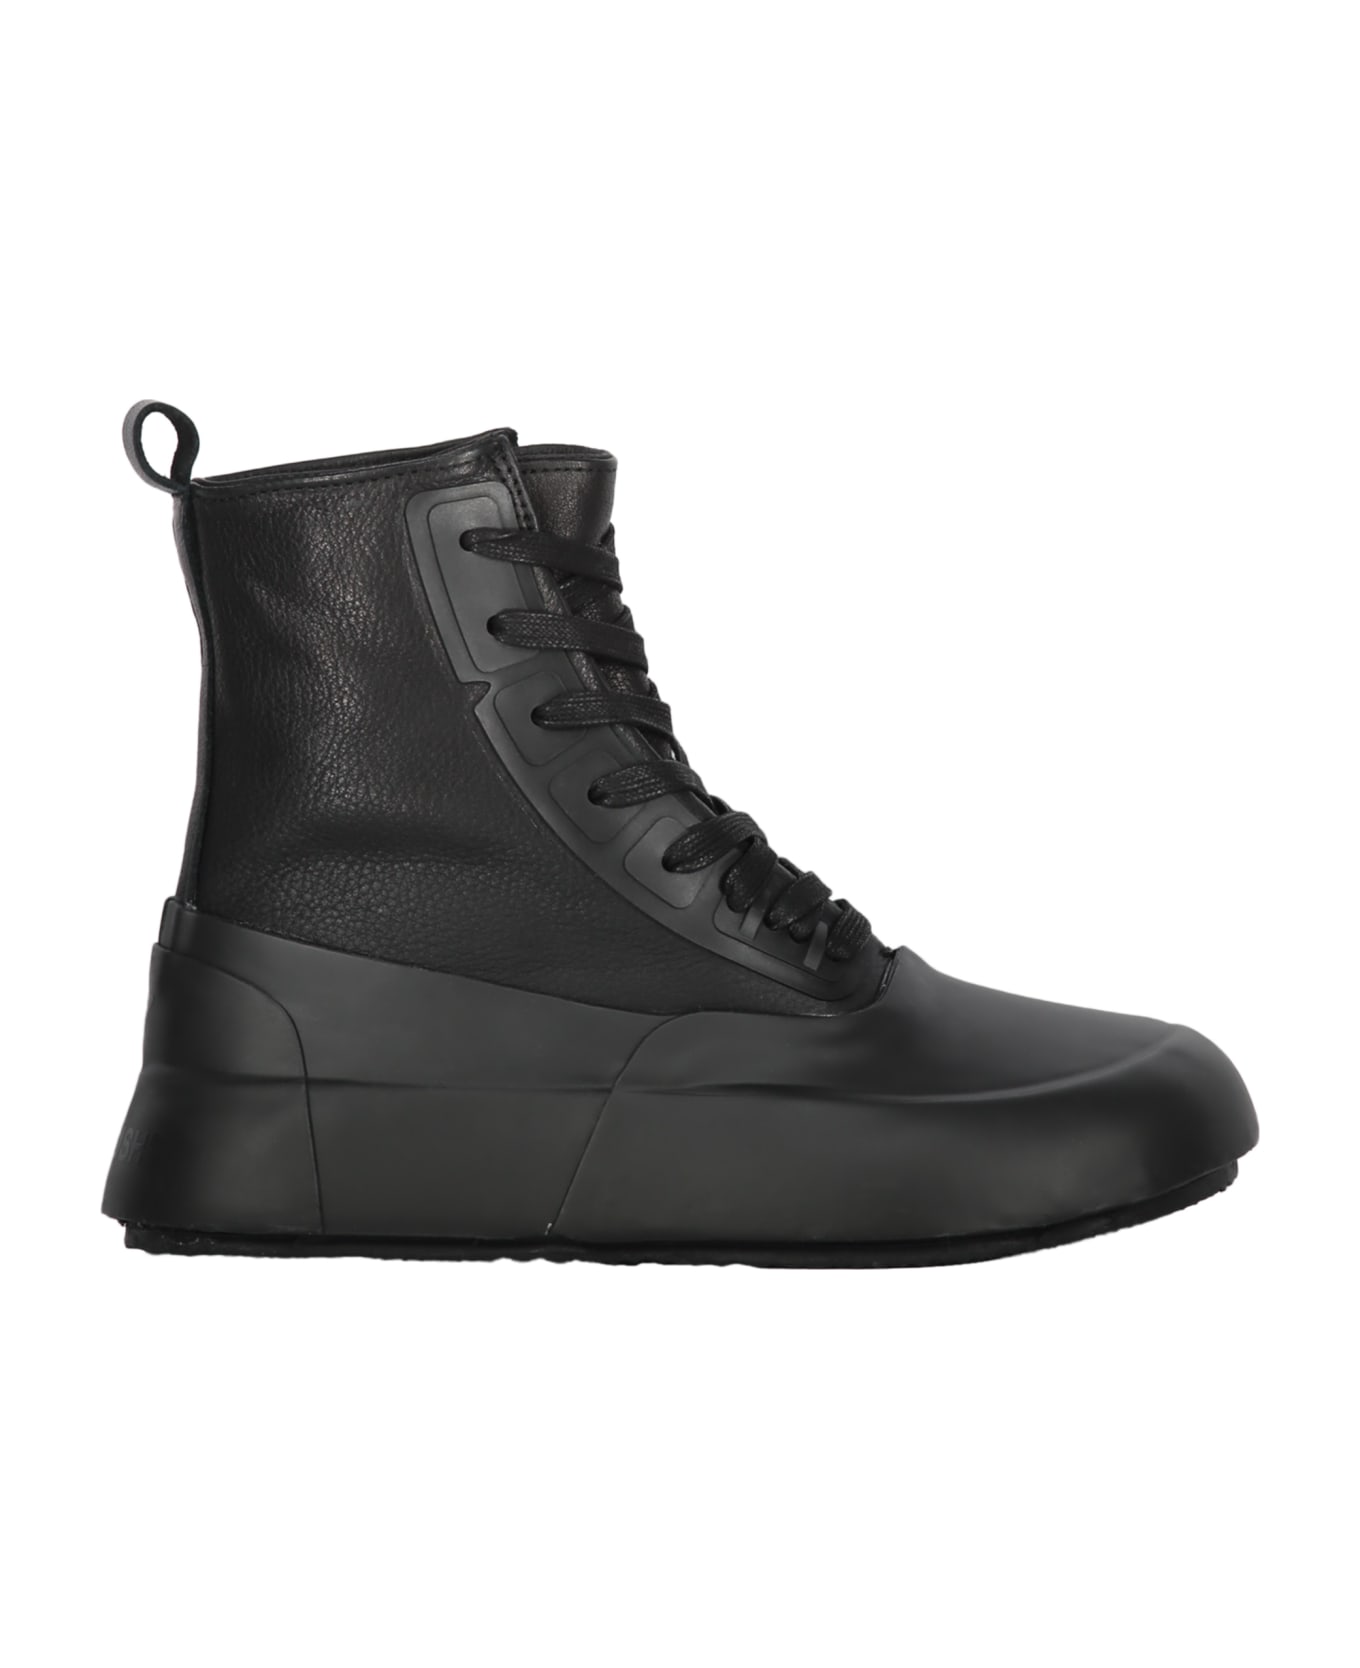 AMBUSH Leather High-top Sneakers - black ブーツ